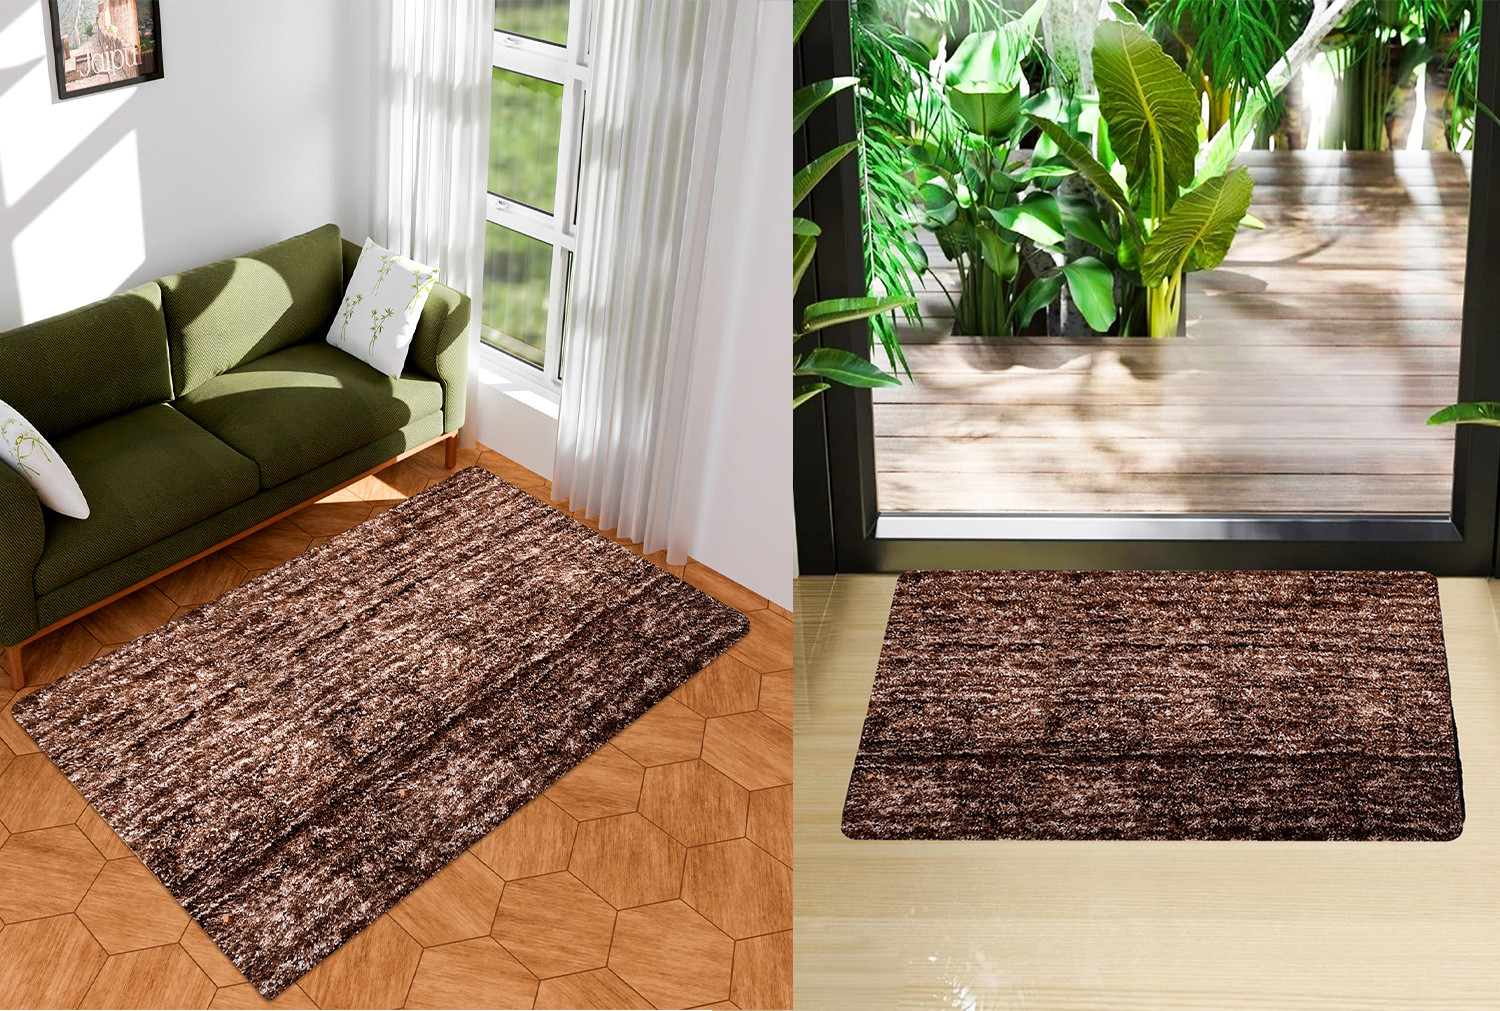 Kuber Industries Carpet | Shaggy Carpet for Living Room | Fluffy Door Mat | Lexus Home Decor Carpet & Door Mat Combo | Floor Carpet Rug & Door Mat Set | Set of 2 | Brown